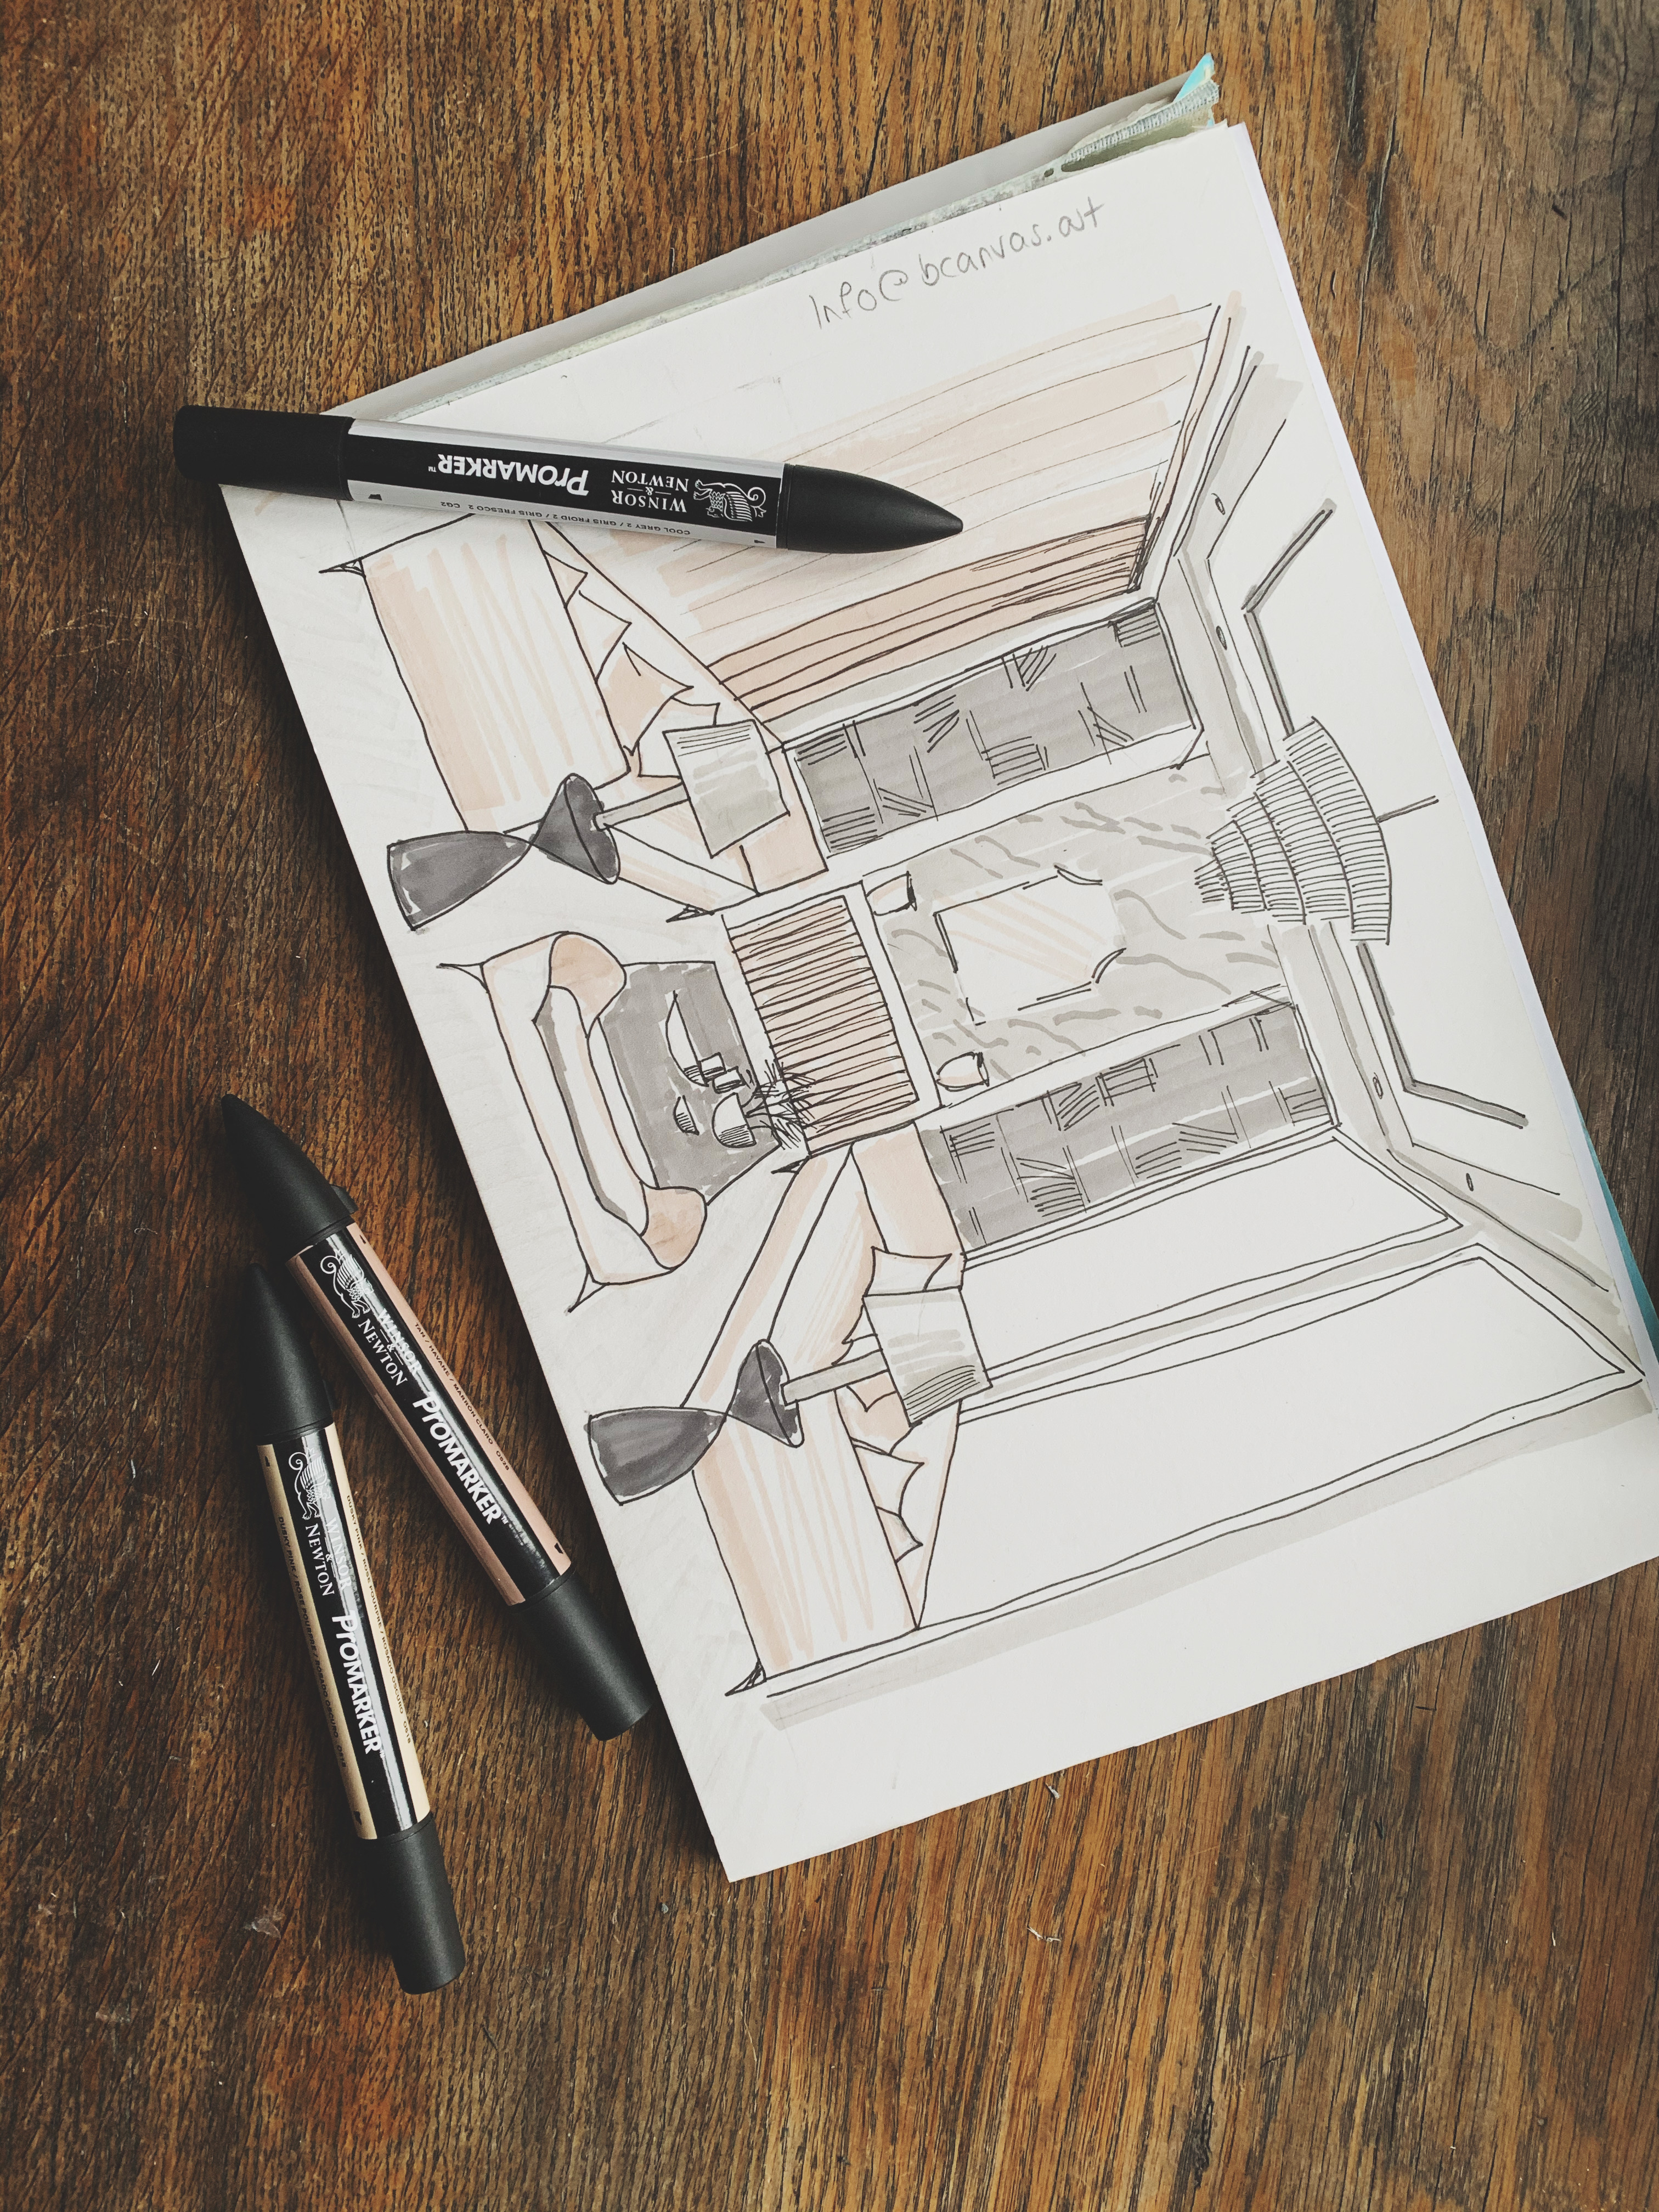 Sketch design of interior office. | CanStock